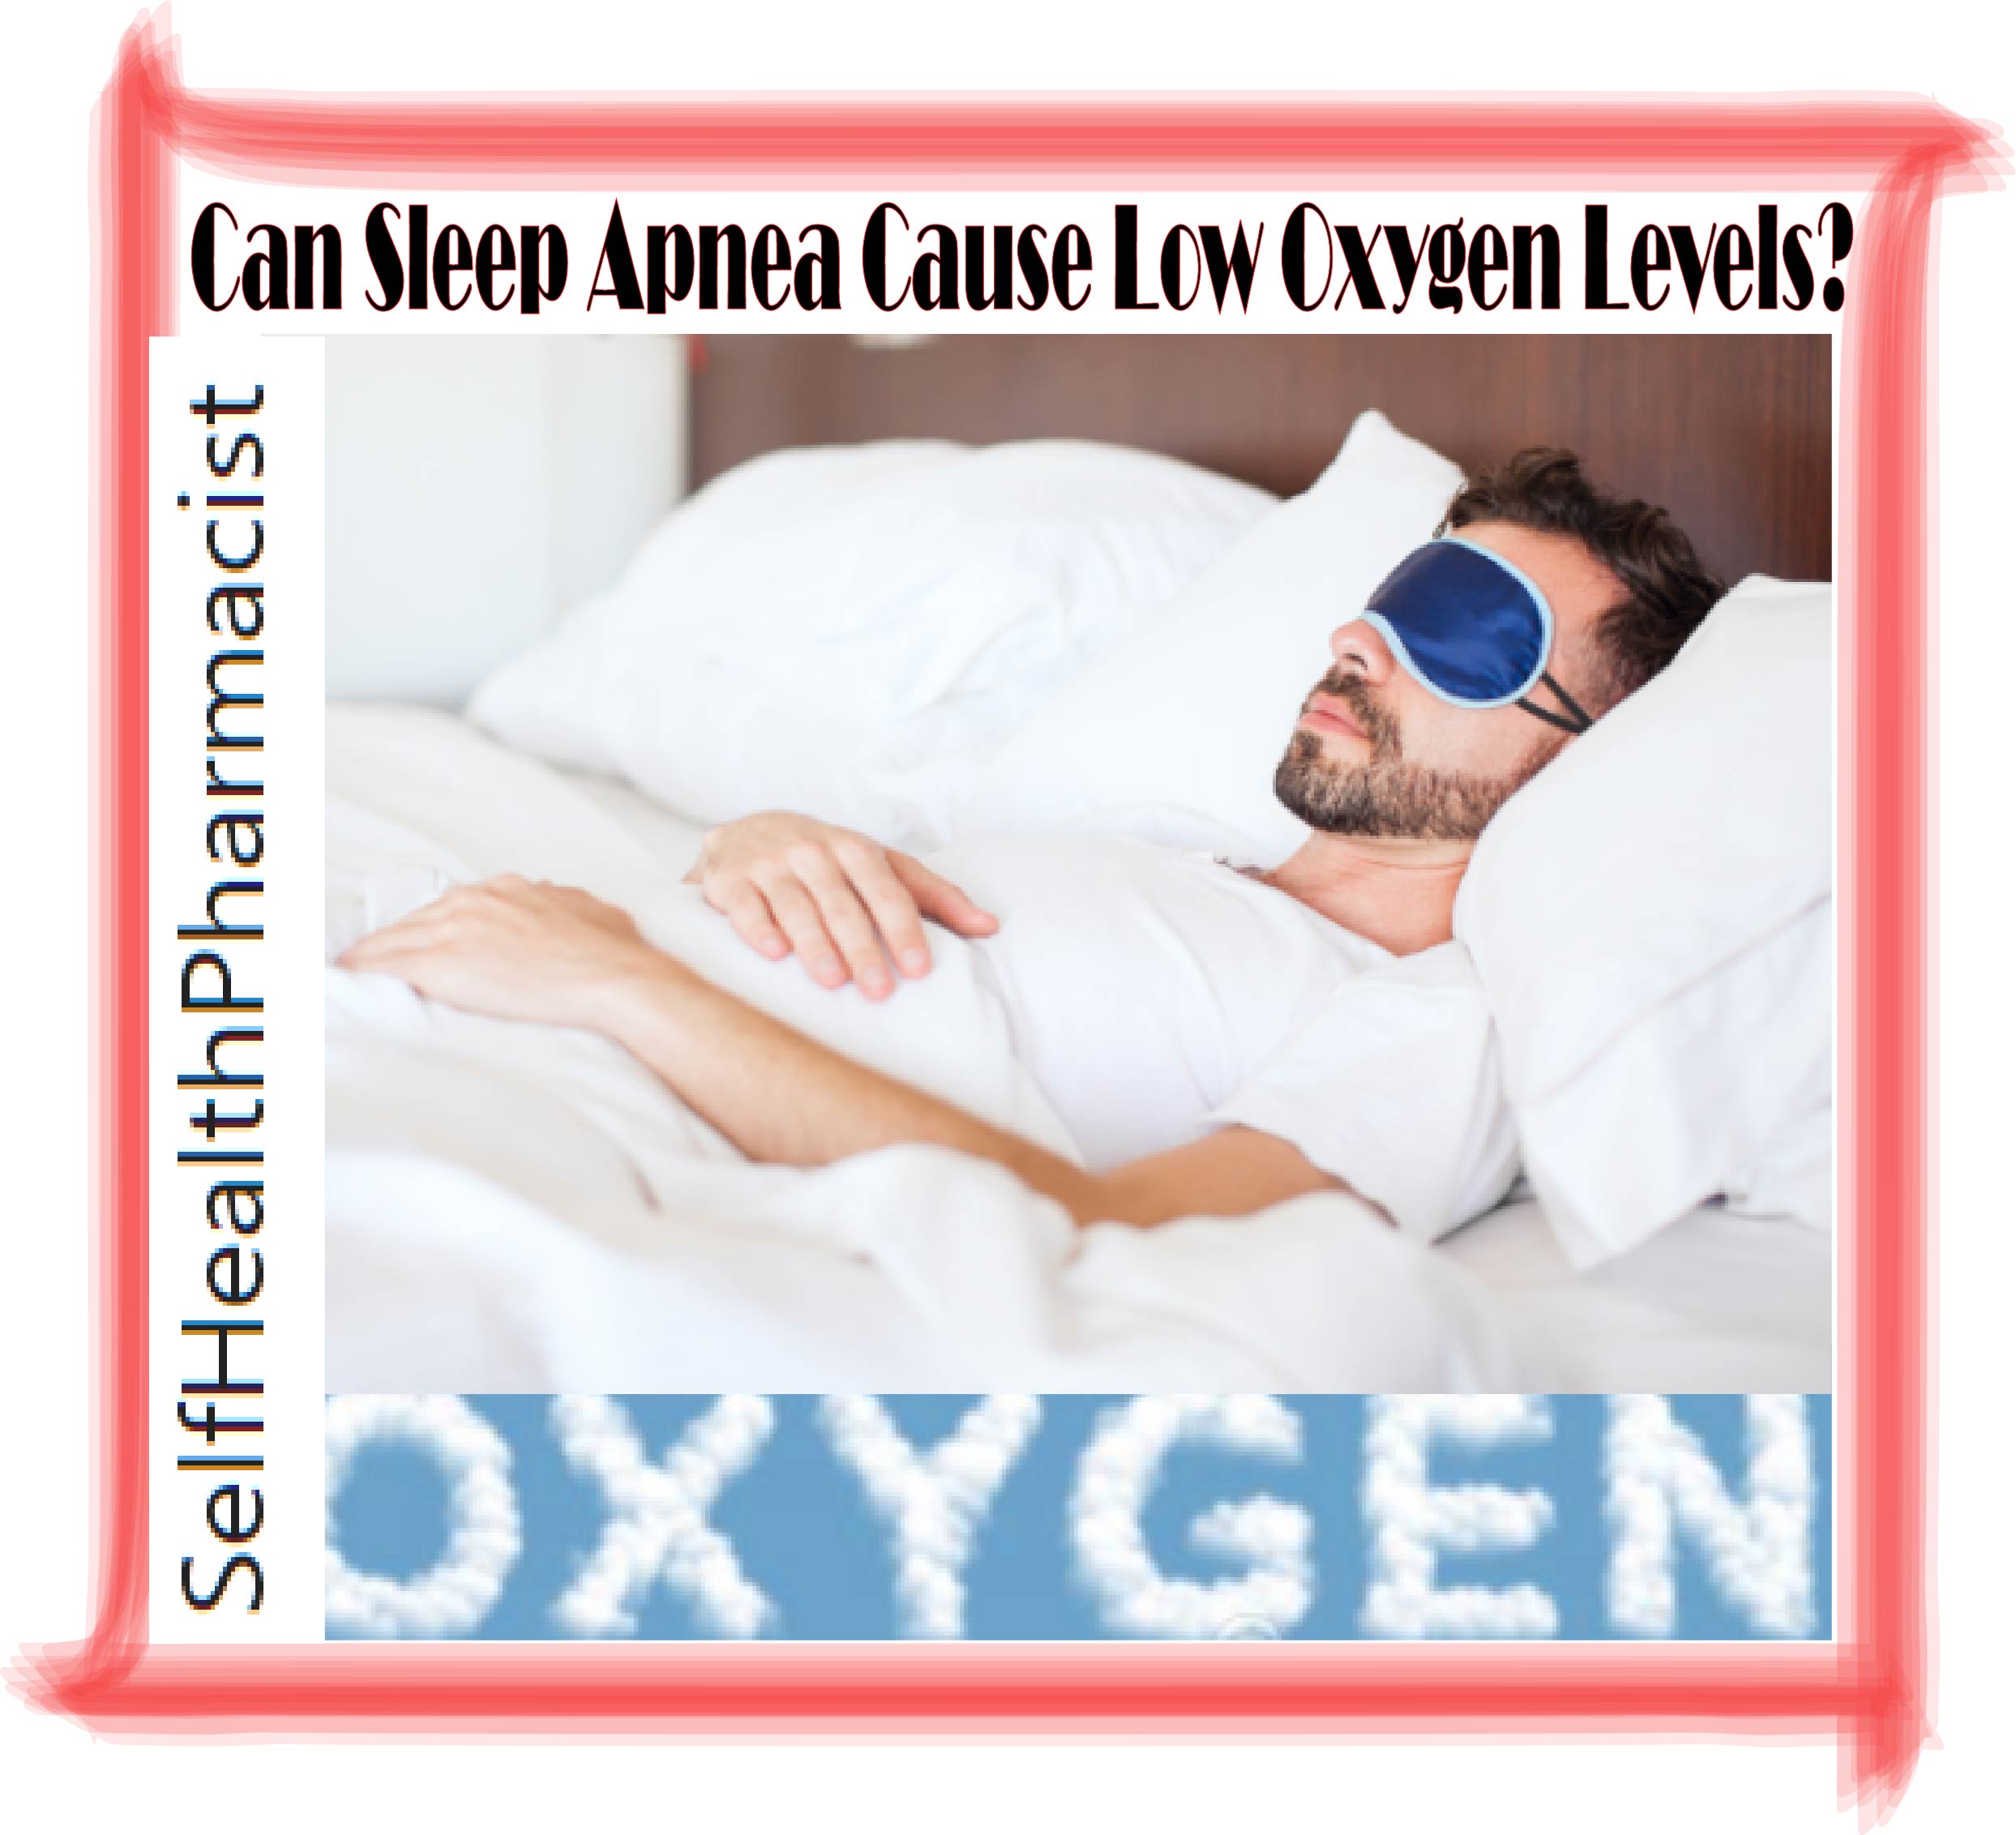 Can Sleep Apnea Cause Low Oxygen Levels?